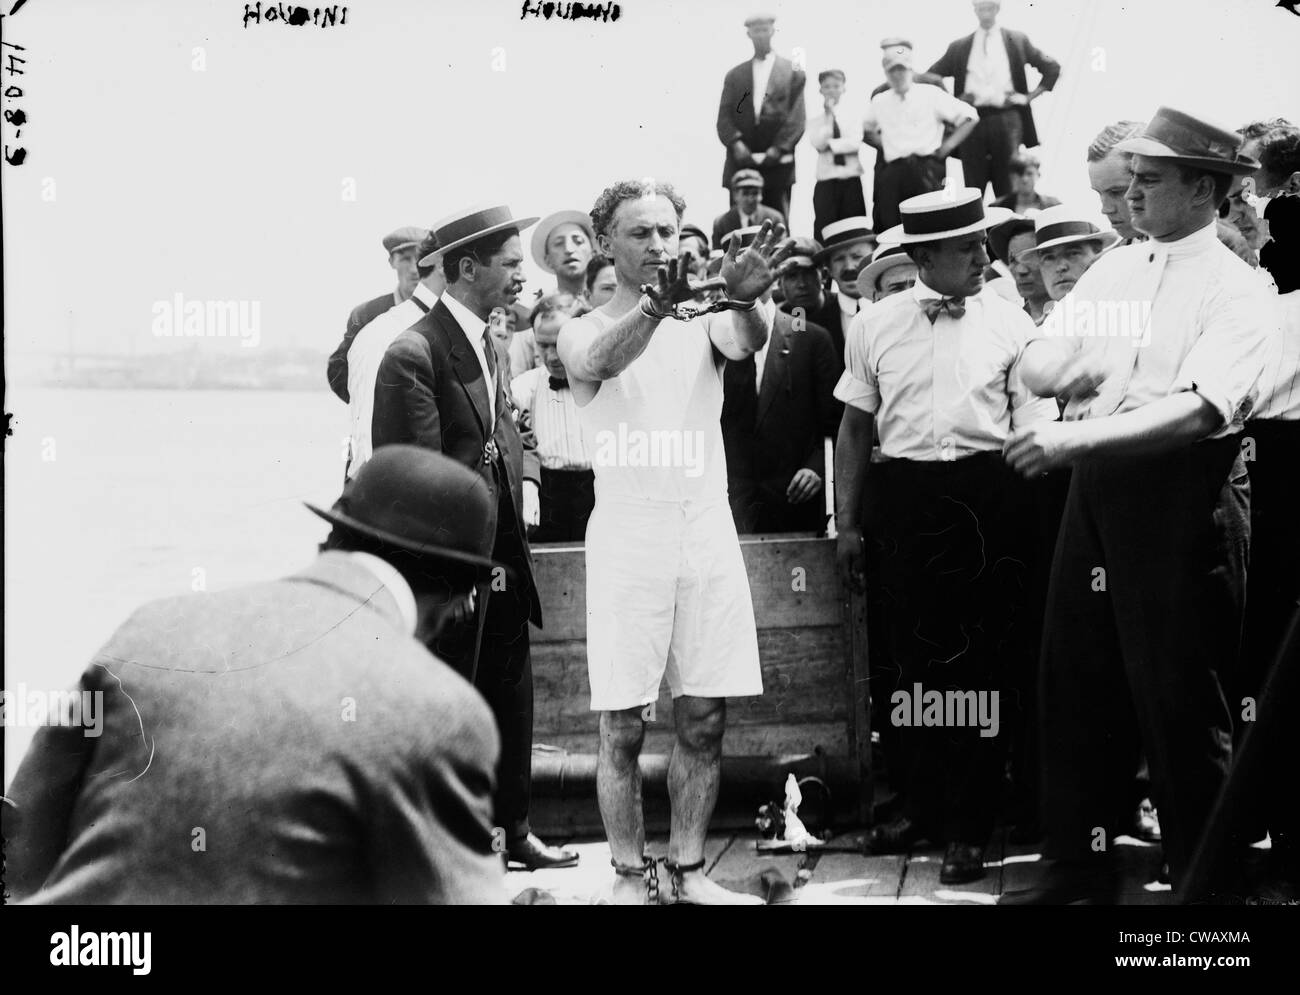 Harry Houdini, c. 1910s Foto de stock